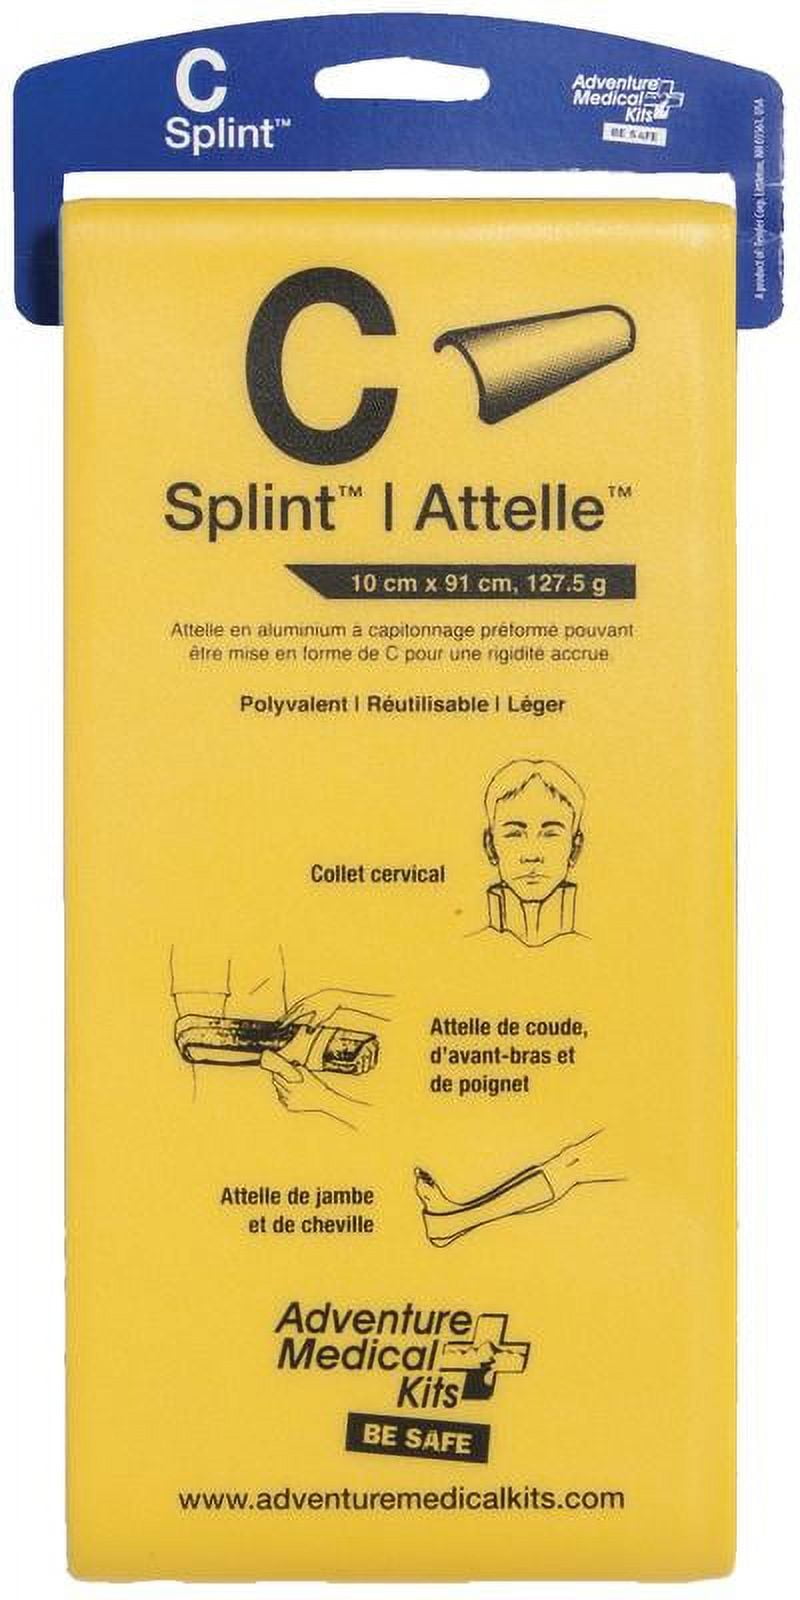 Ankle Brace Support For Men Women Adjustable Plantar Fasciitis Night Splint  Relief Set (massage Ball Color Random)